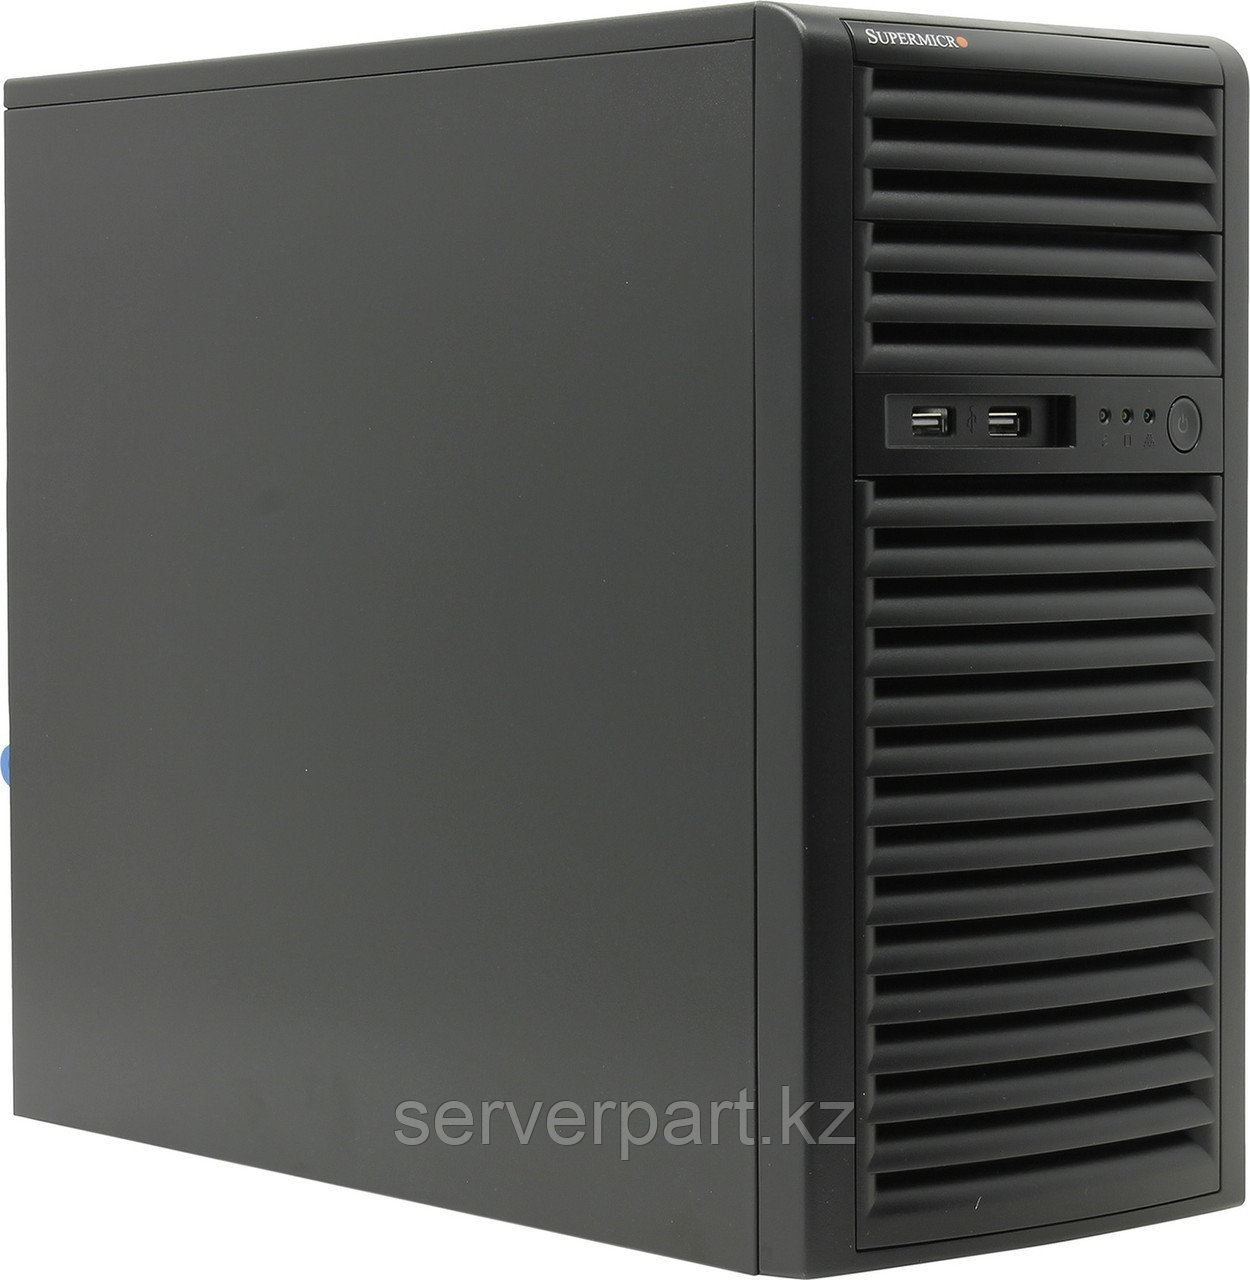 Сервер Supermicro SYS-5039C Tower 4LFF/4-core intel xeon E2124 3.3GHz/16GB EUDIMM/1x240GB SSD MU Hyb, фото 1